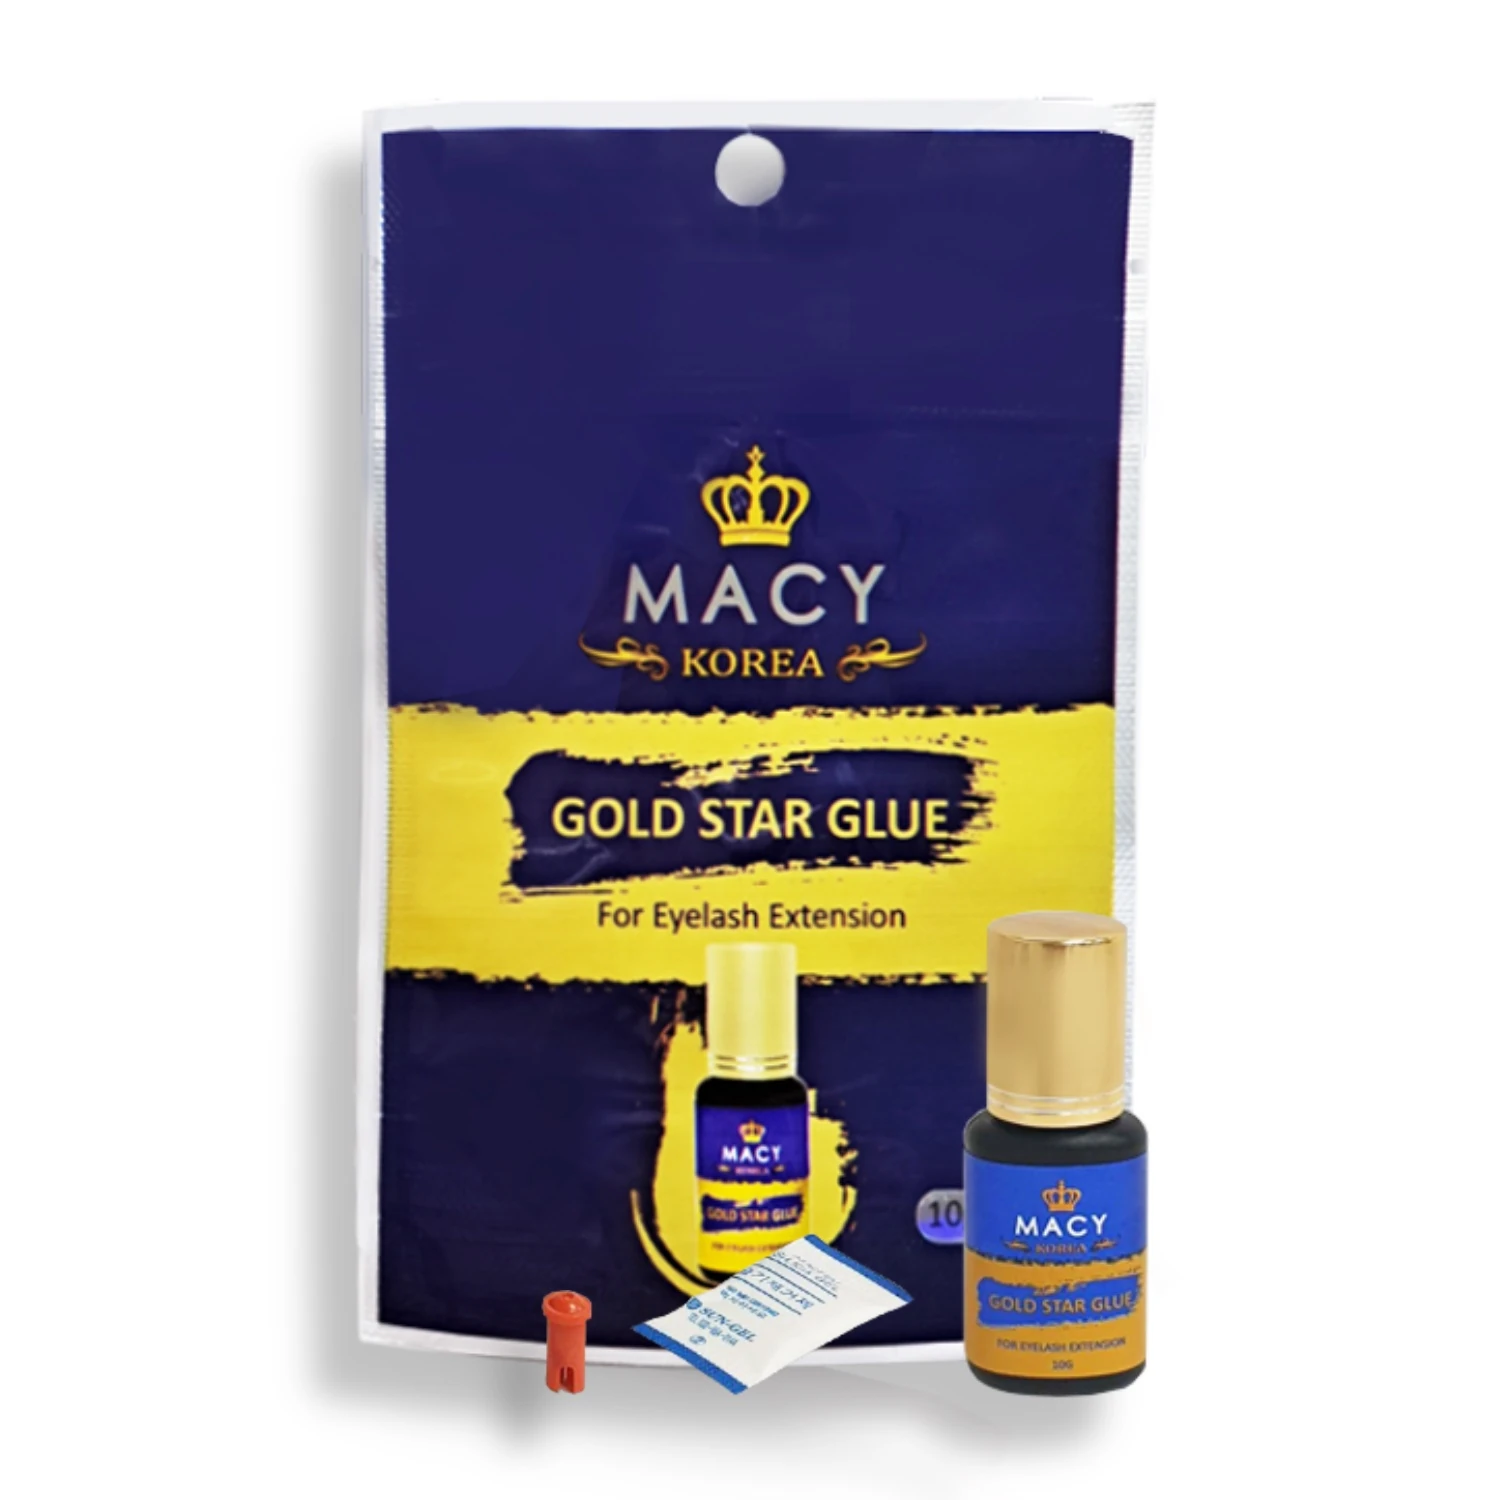 Macy Glue Wimpernkleber "Gold Star" 5g